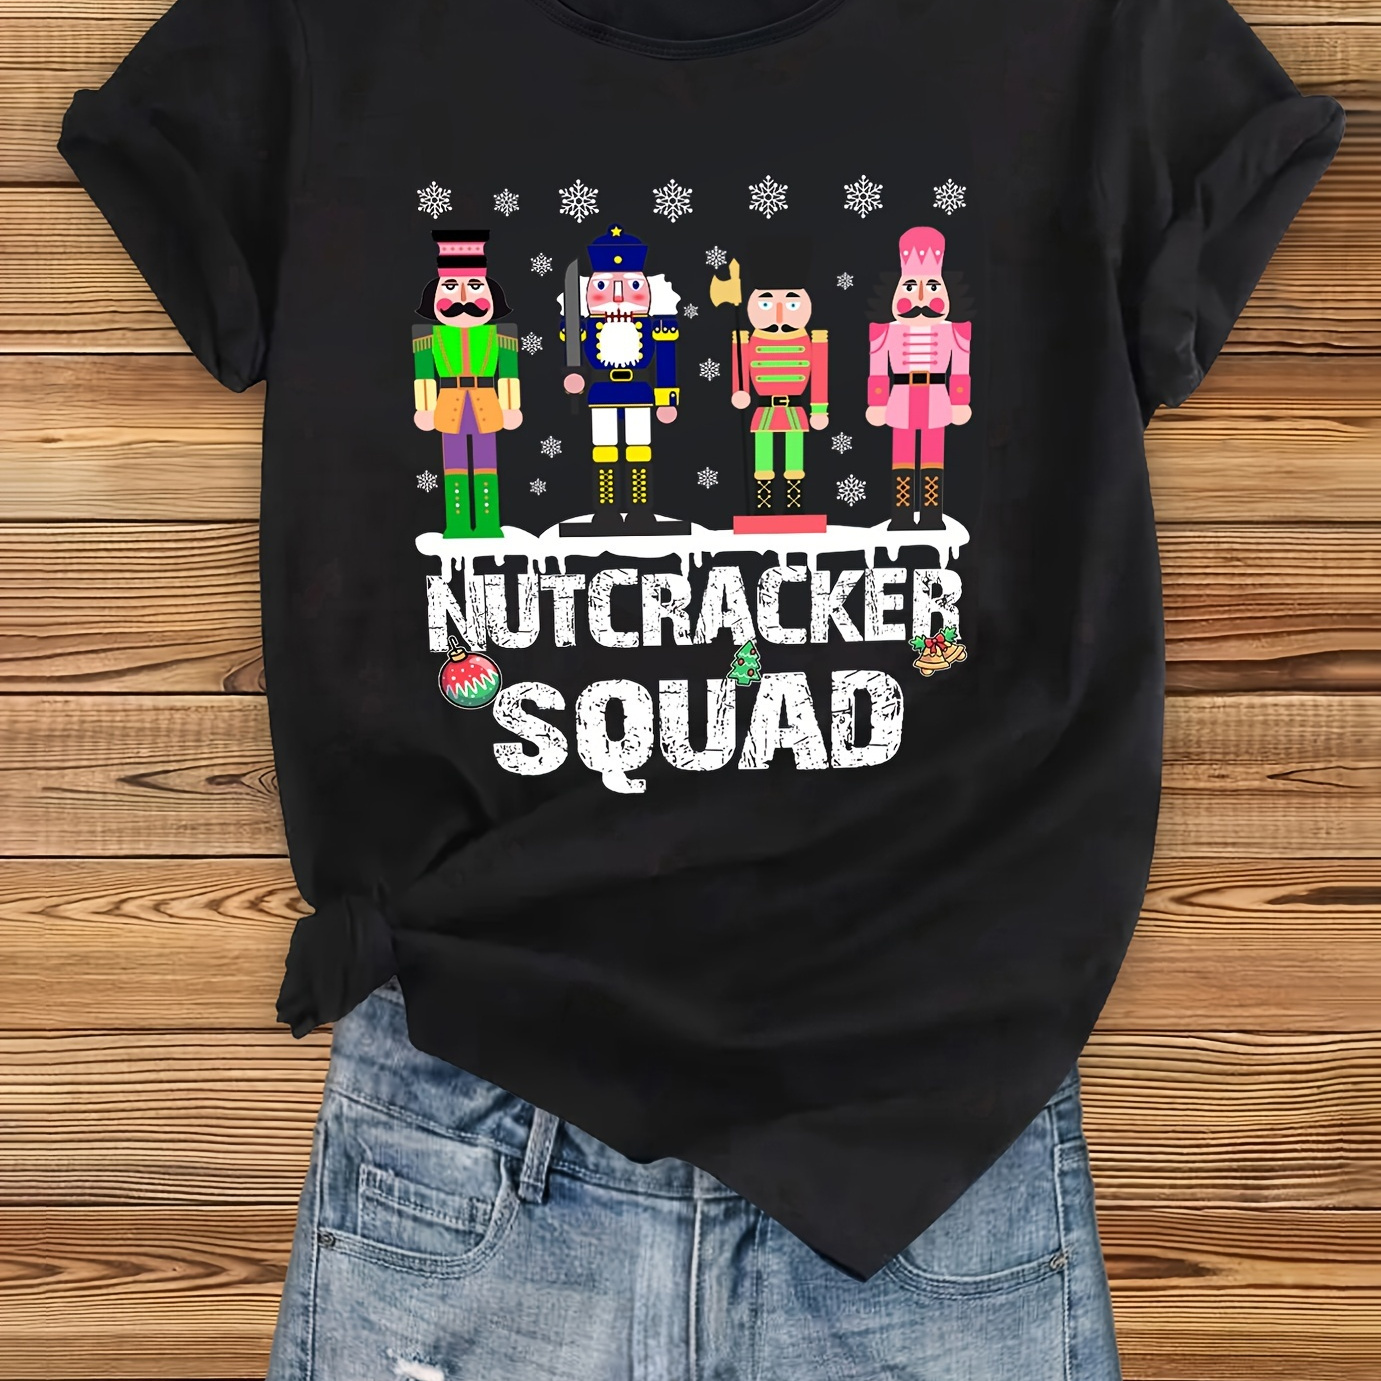 

Nutcracker Squad Print T-shirt, Casual Crew Neck Short Sleeve Top, Women's Clothing